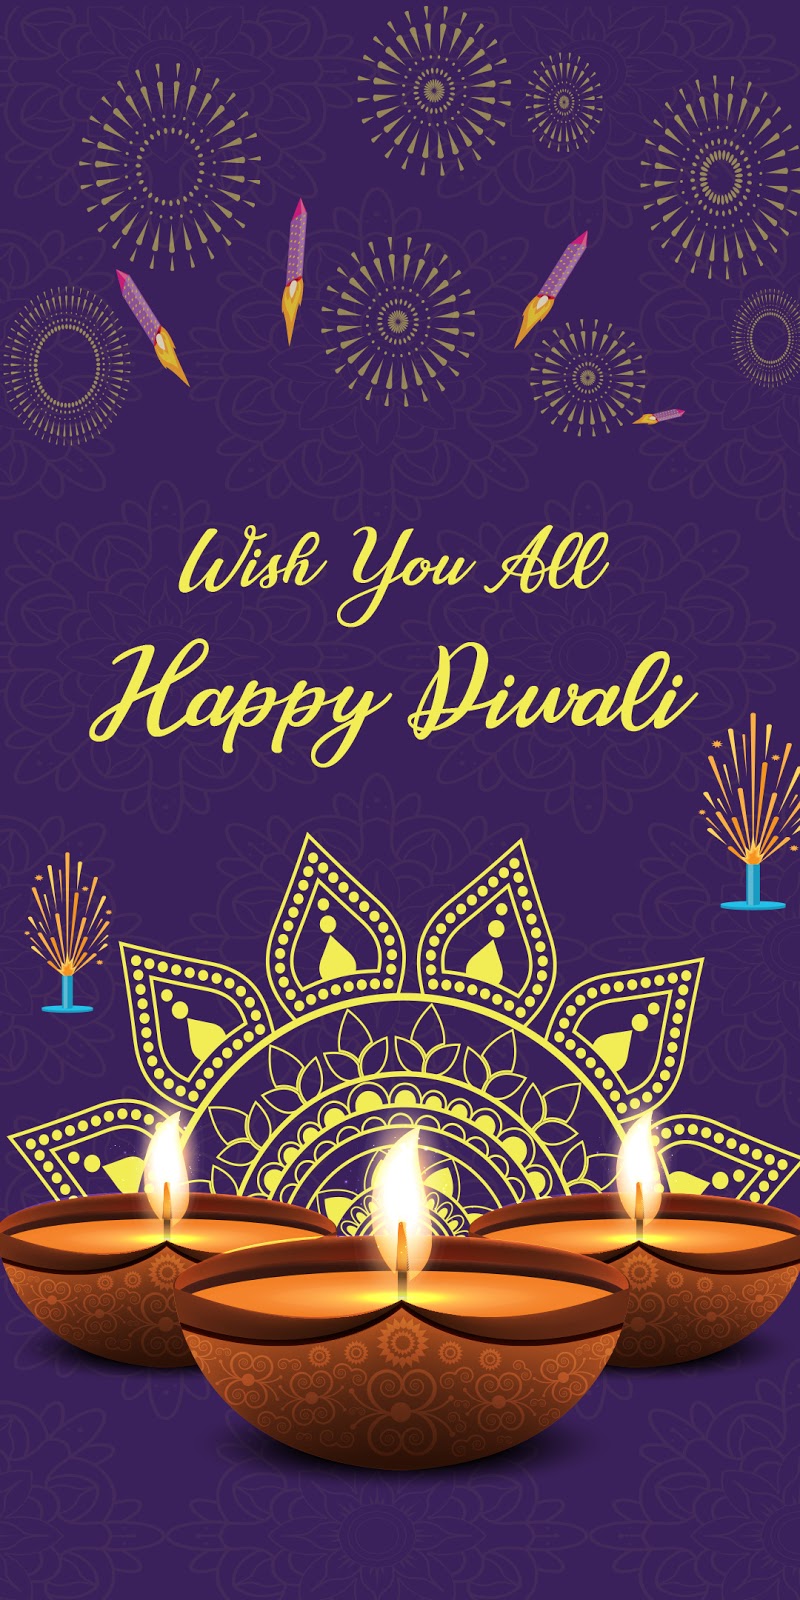 Happy Diwali 2019 Mobile Wallpaper - HD Mobile Walls